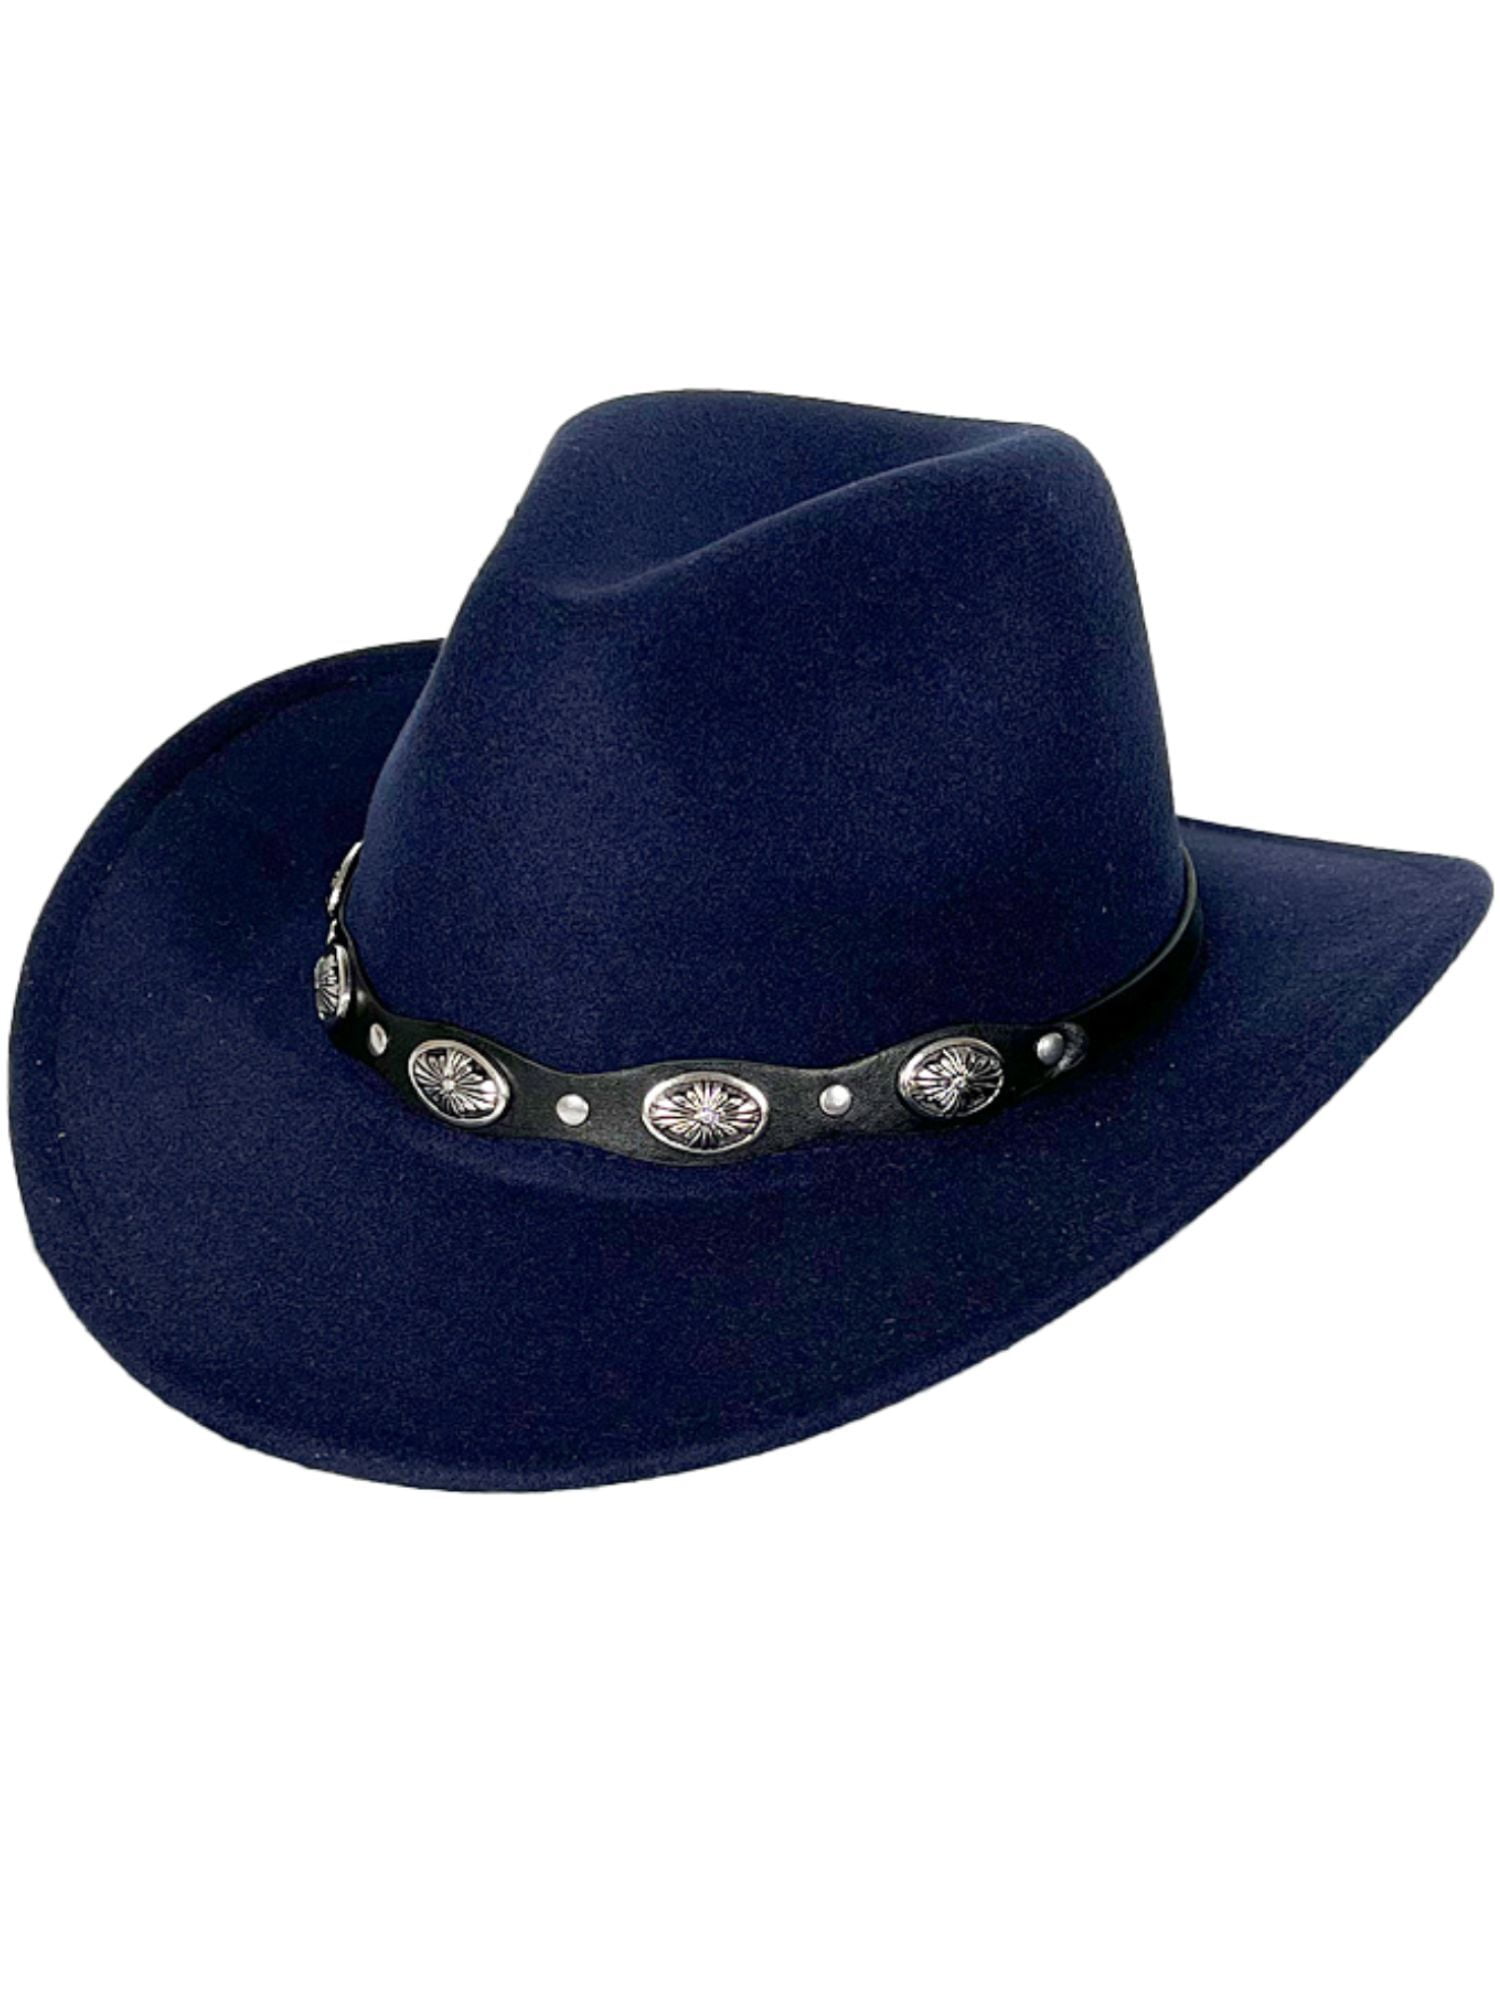 Hercicy 6 Pcs Cowboy Hats Pack Women Men Retro Wide Brim Western Hat Fur  Faux Felt Cowgirl Hat Belt Buckle Panama Hat